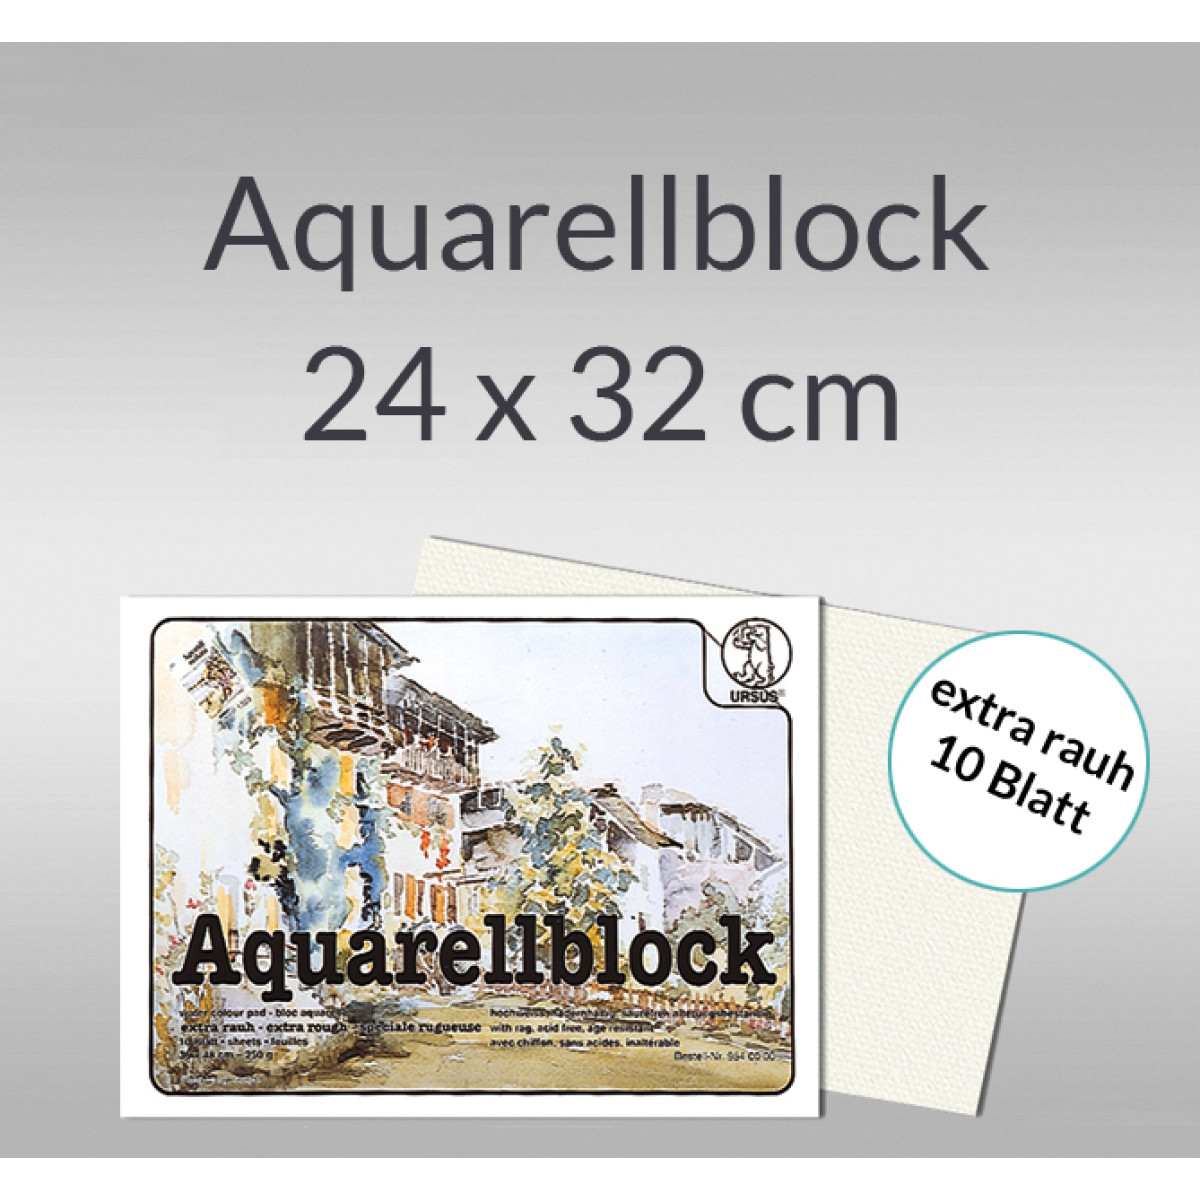 Aquarellblock extra rauh 250 g/qm 24 x 32 cm